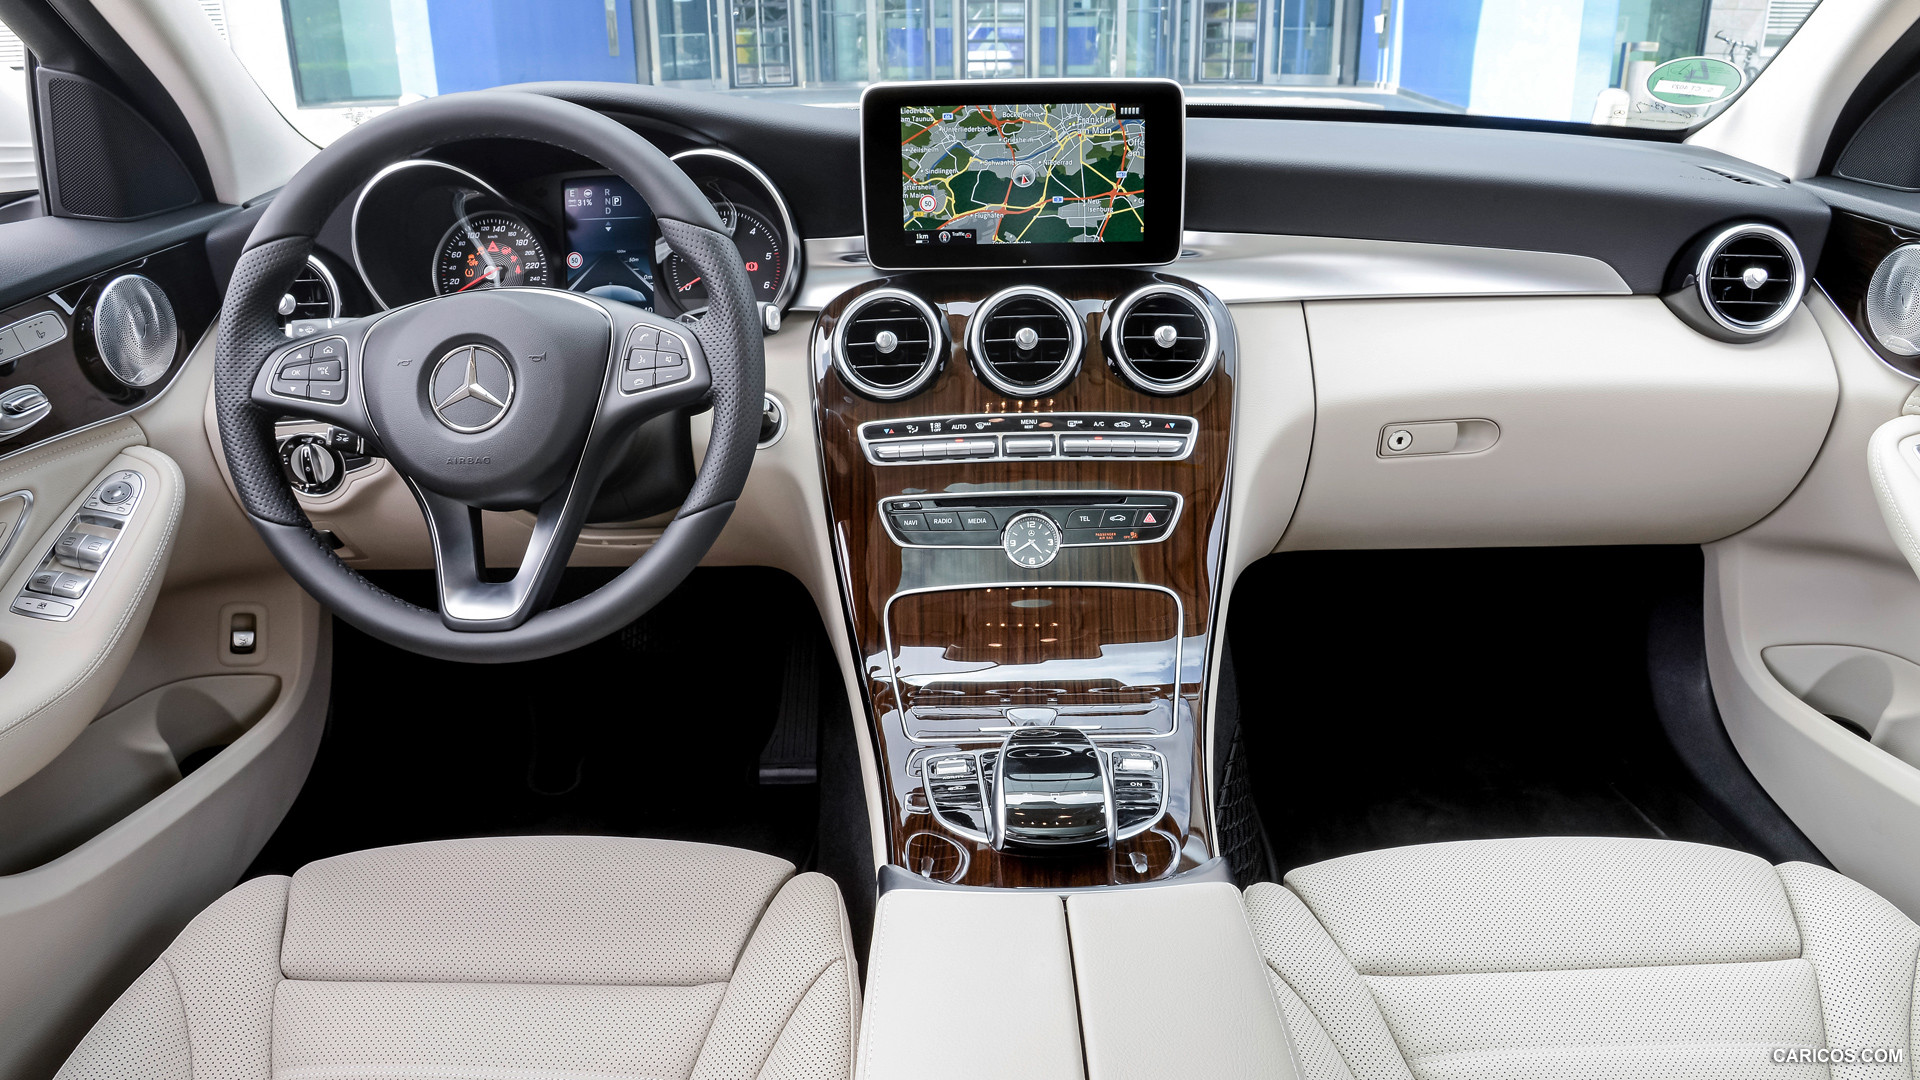 2015 Mercedes-Benz C-Class C 300 BlueTEC HYBRID Estate (Avantgarde, Leather Beige) - Interior, #115 of 173